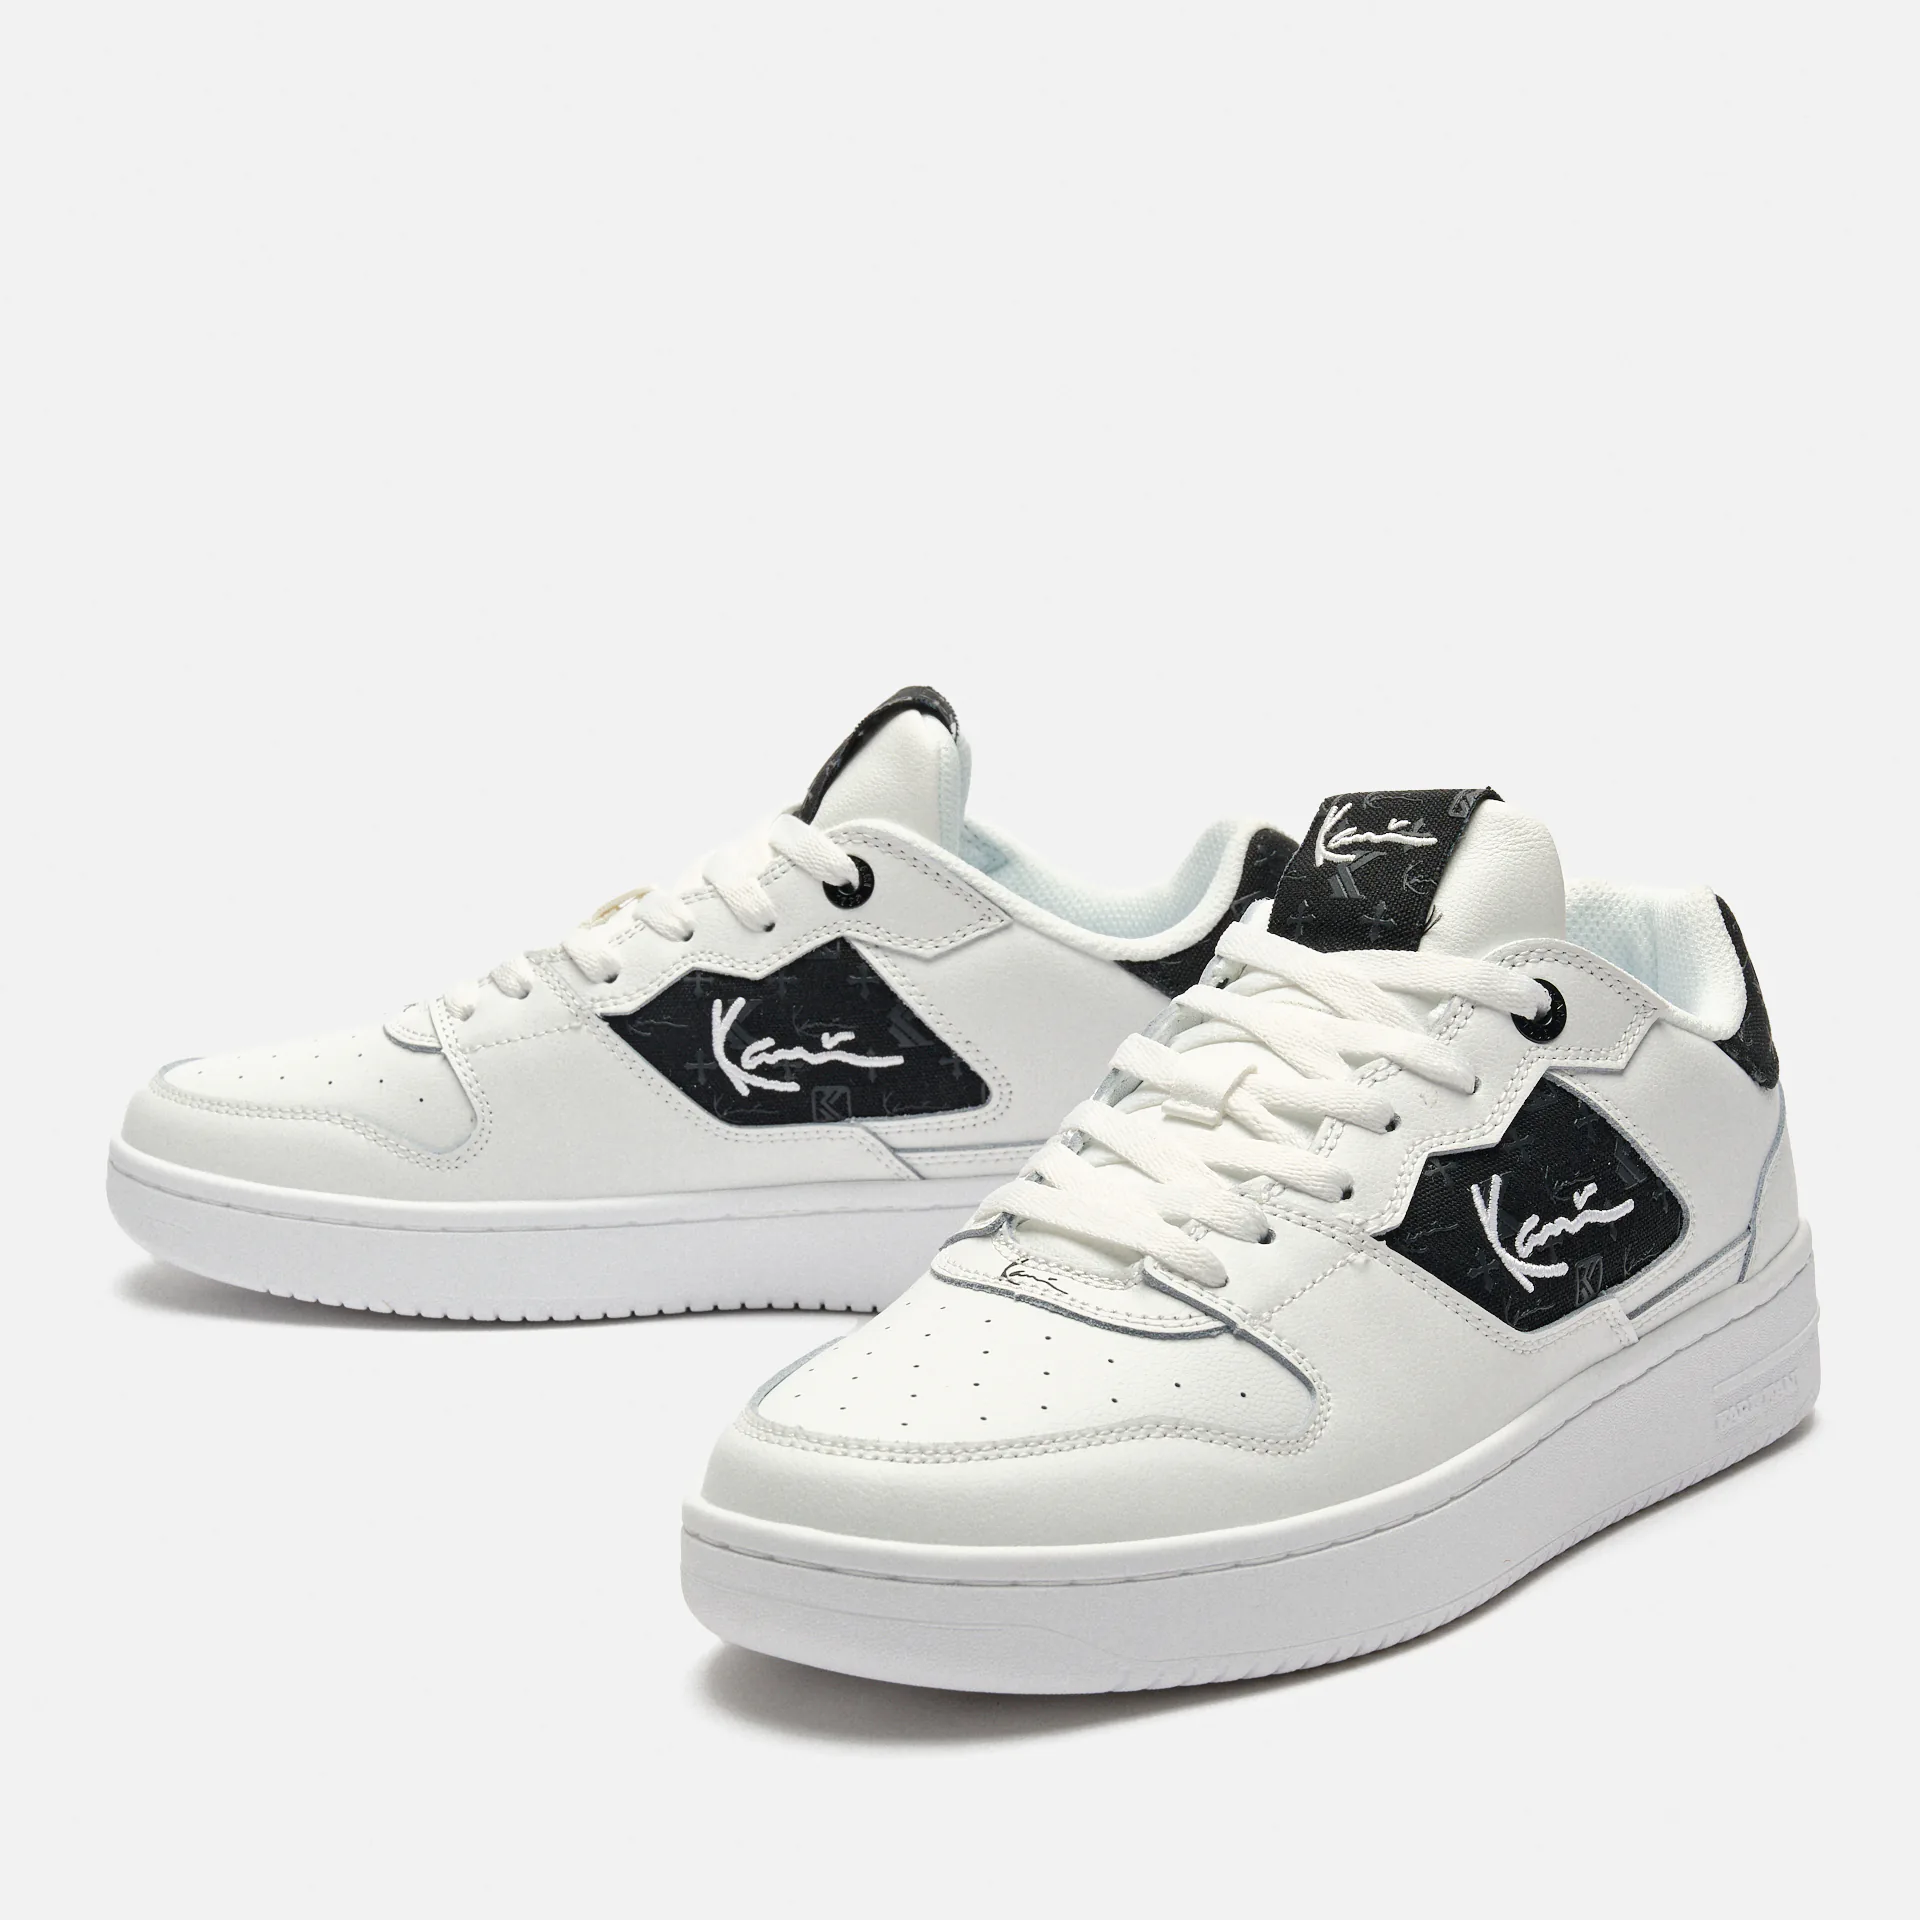 Karl Kani89 Classic Sneaker White/Black